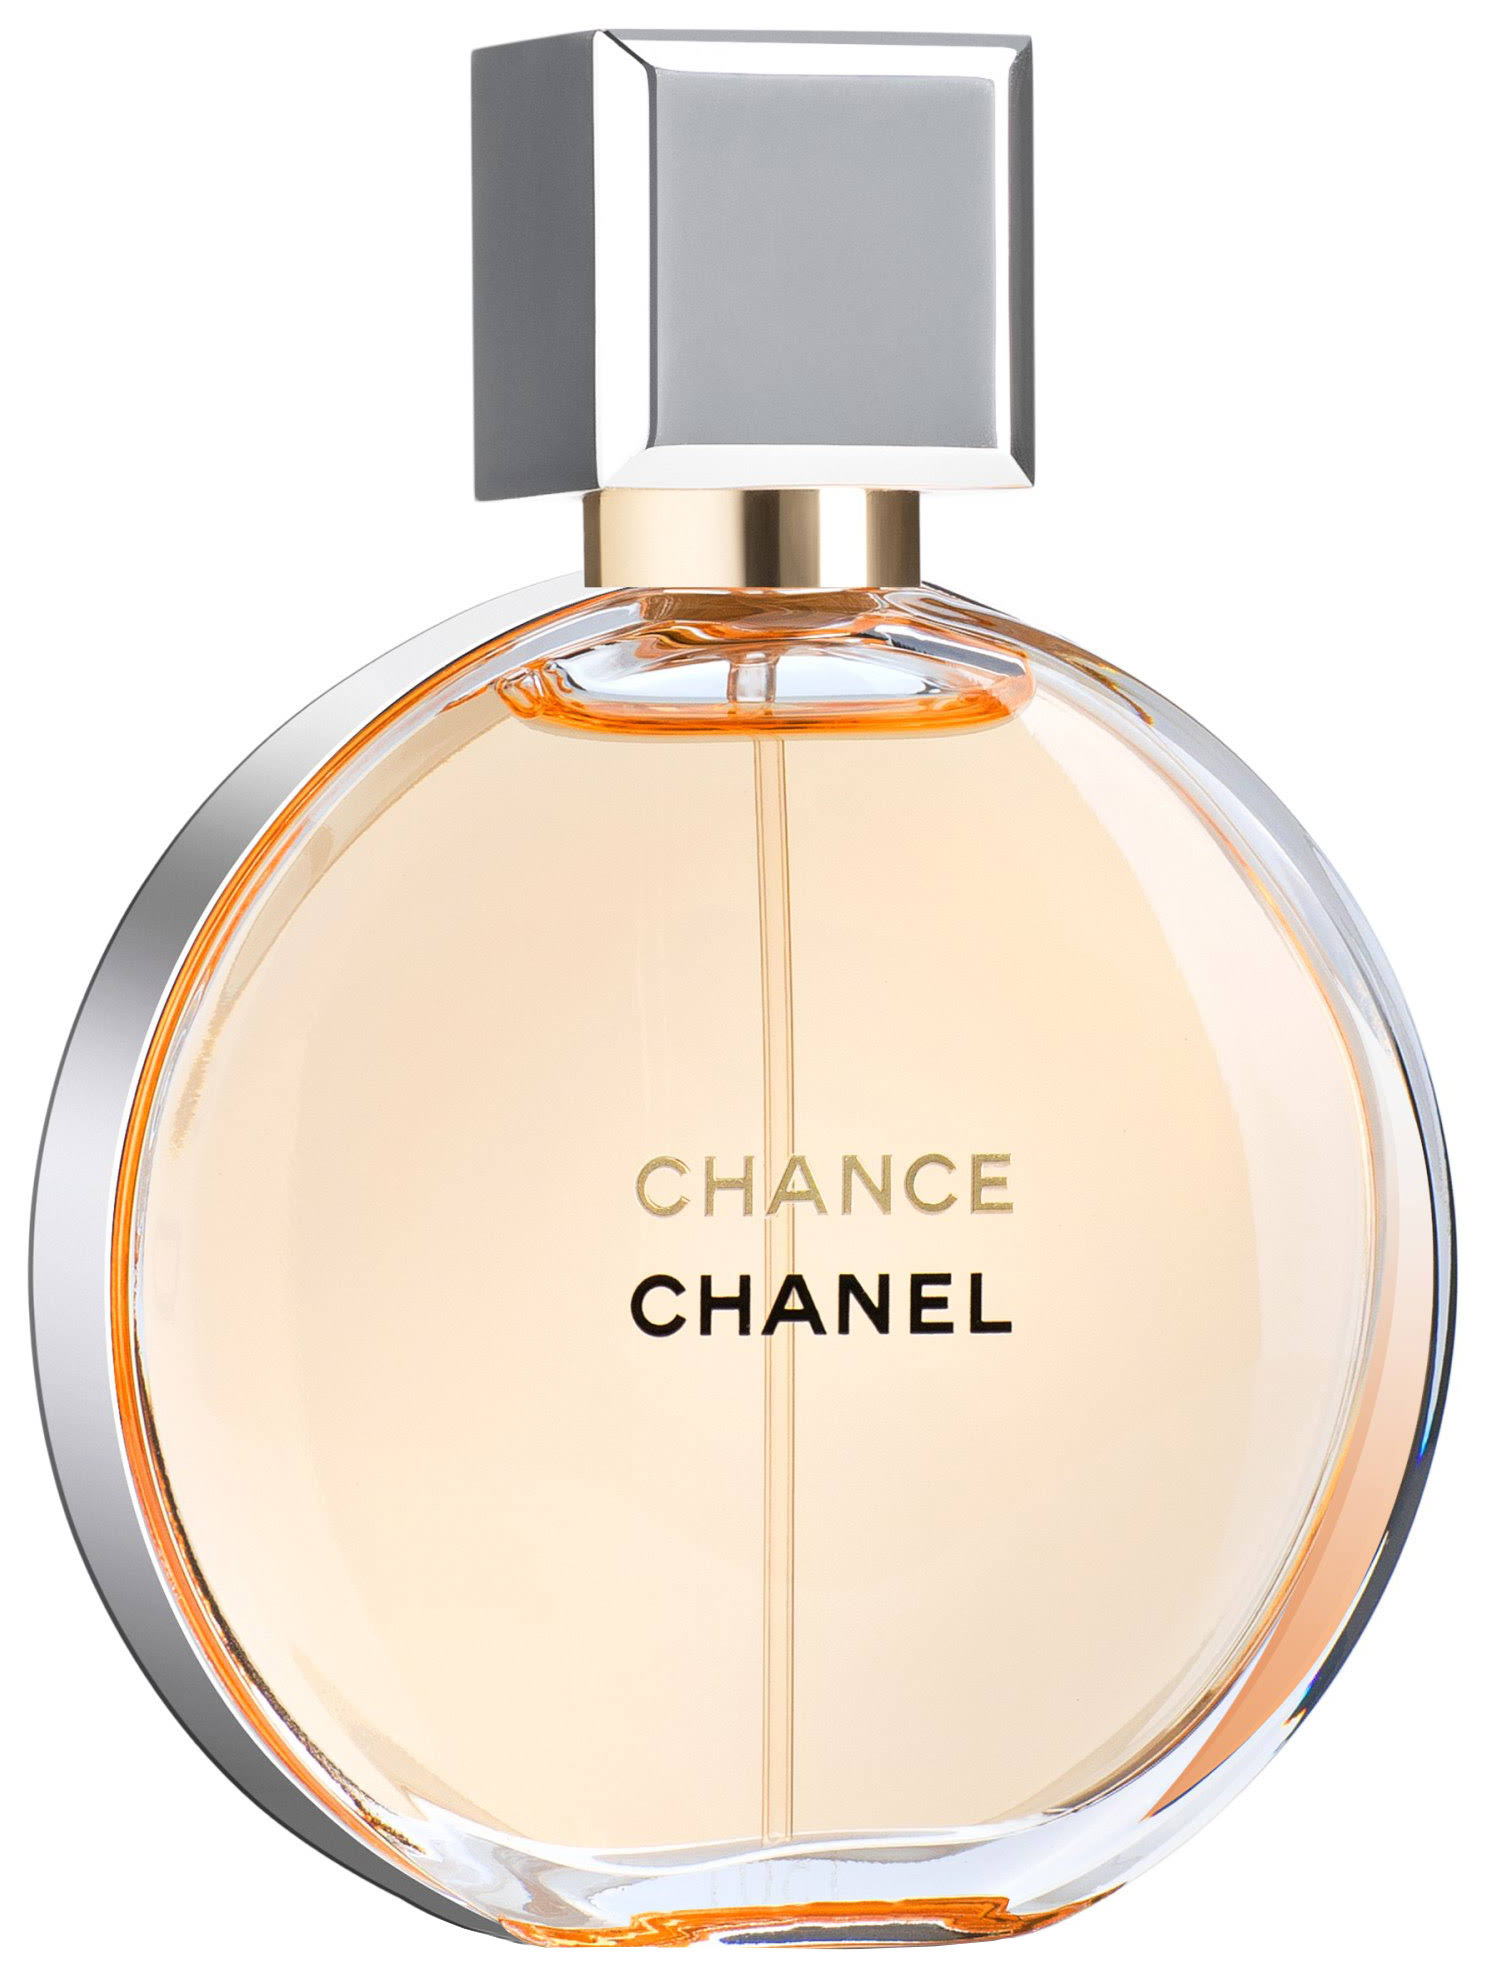 Chanel "Chance" Eau De Parfum Spray - 50ml